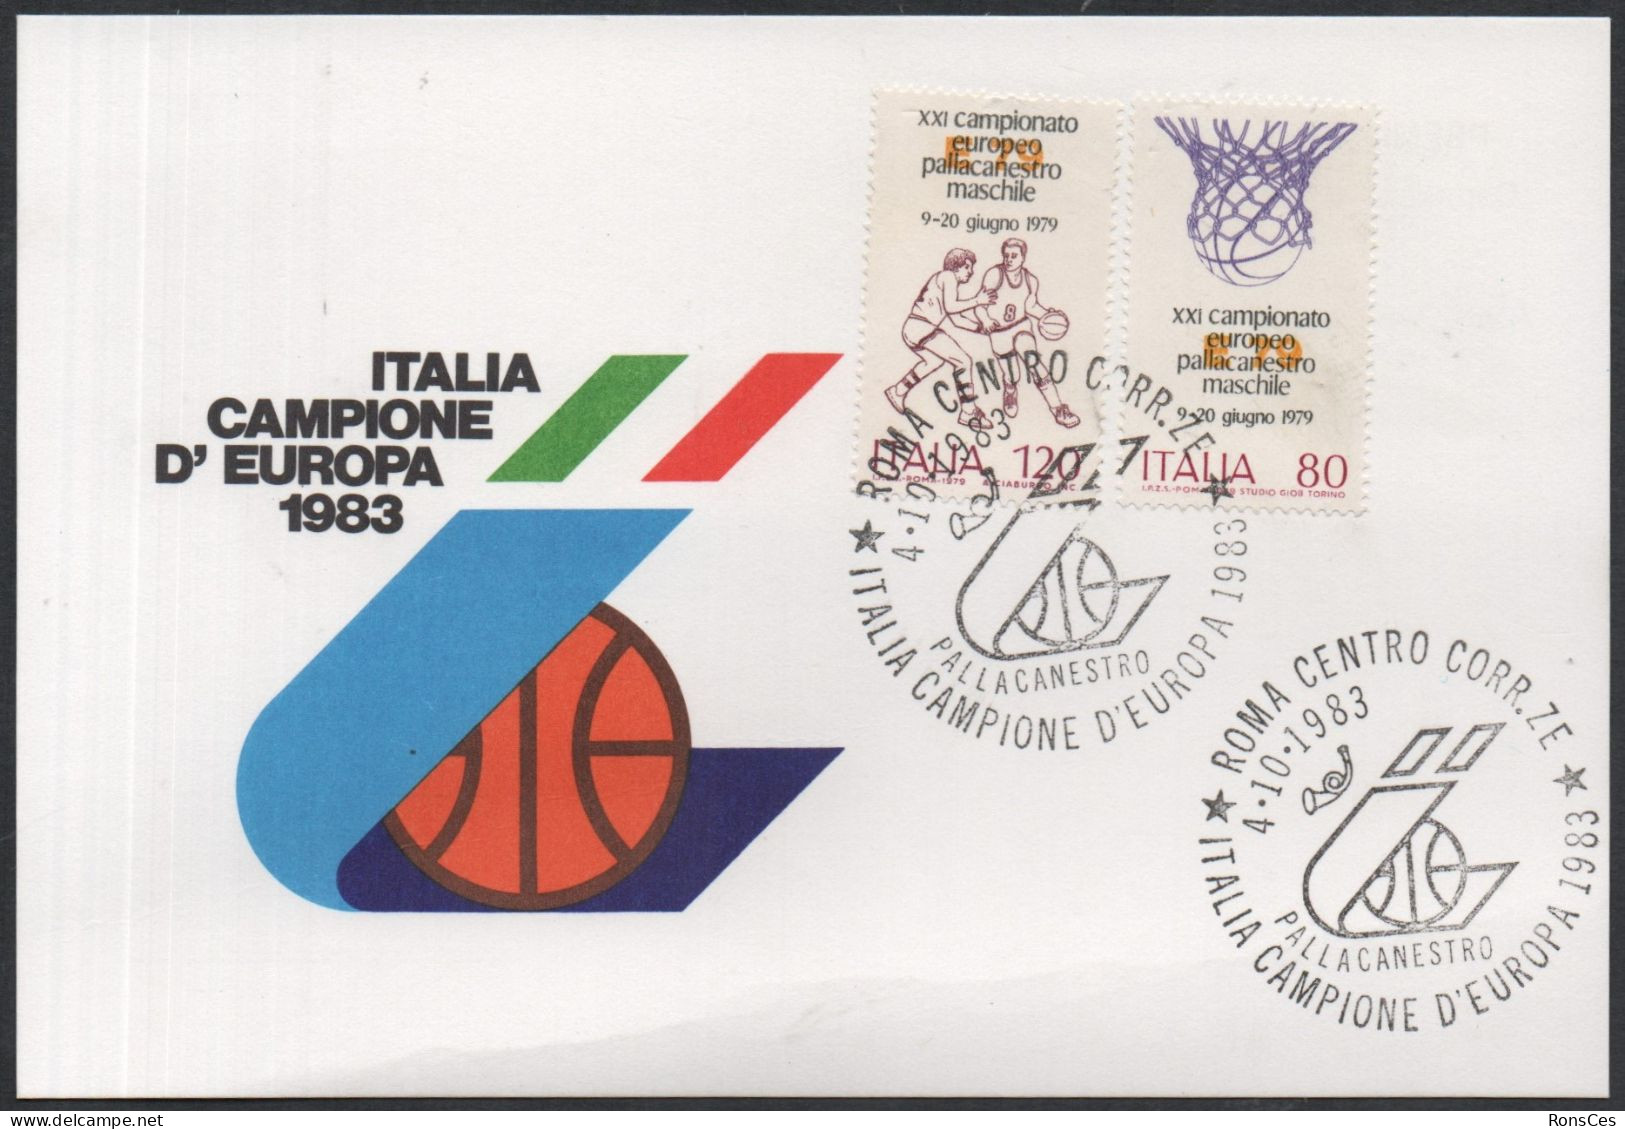 BASKETBALL - ITALIA ROMA 1983 - ITALIA CAMPIONE D'EUROPA PALLACAMESTRO - CARTOLINA UFFICIALE - A - Basketball